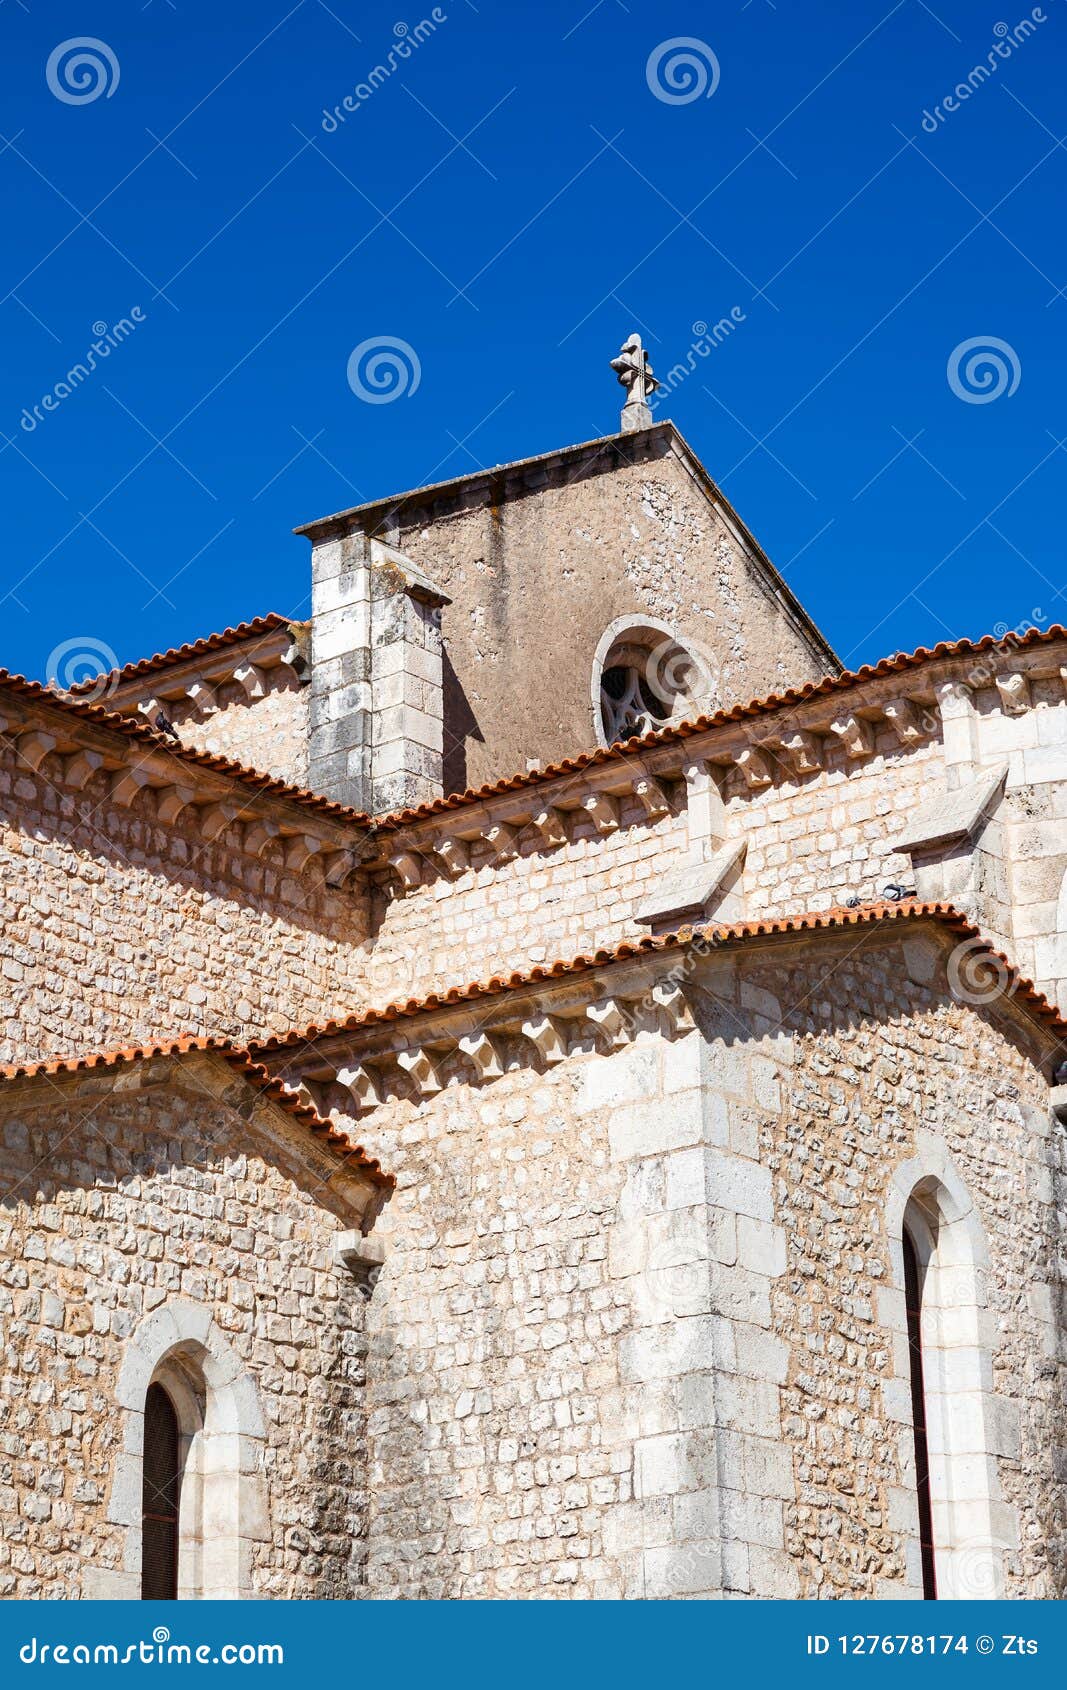 santarem, portugal. close up of the apse and chapels of the igreja de santa clara church